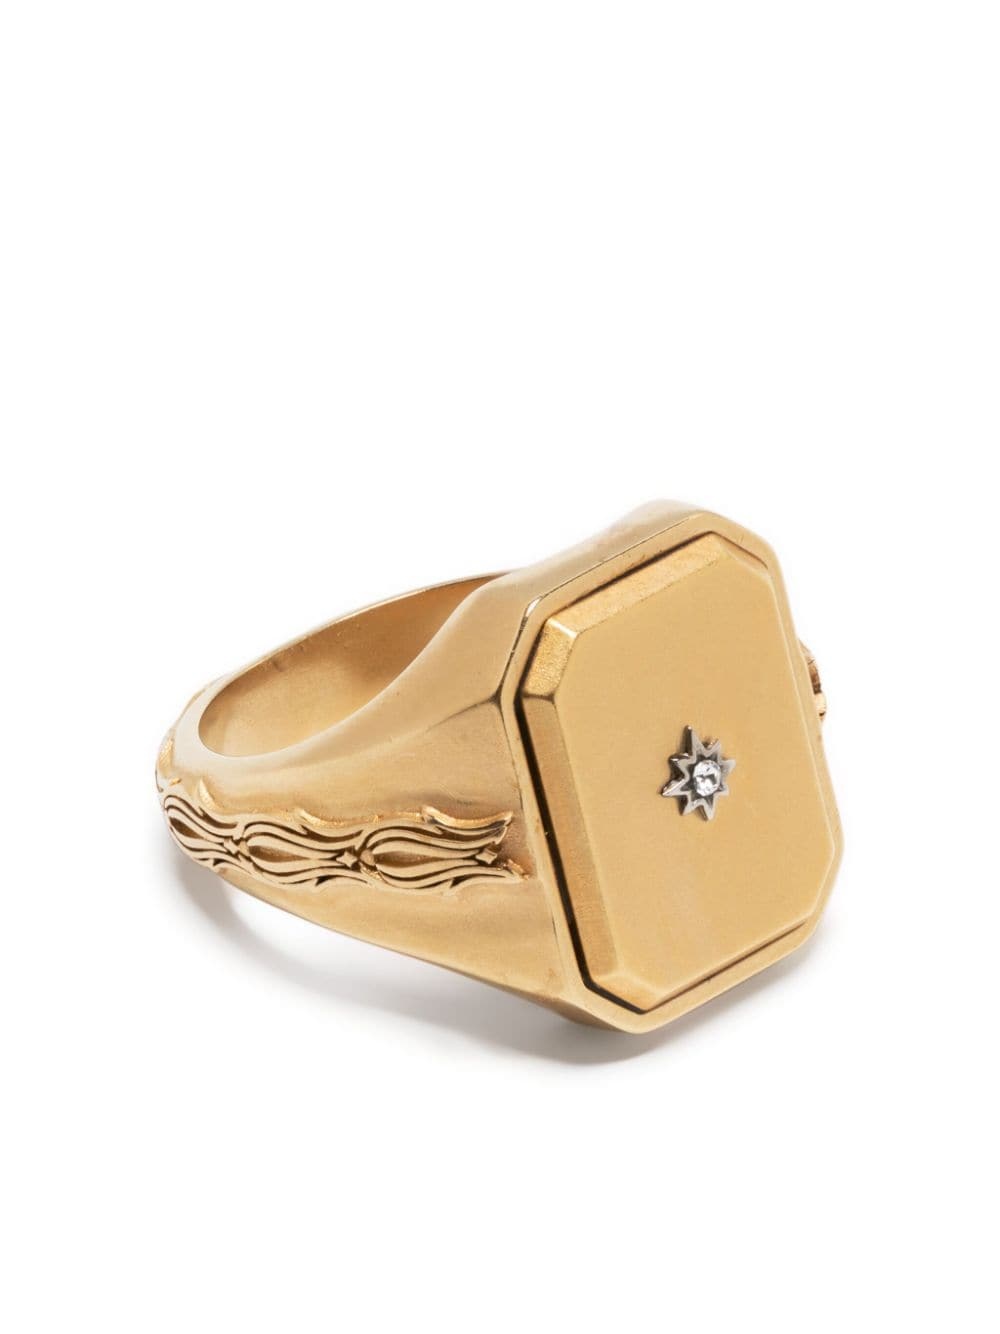 diamantÃ©-embellished signet ring - 1